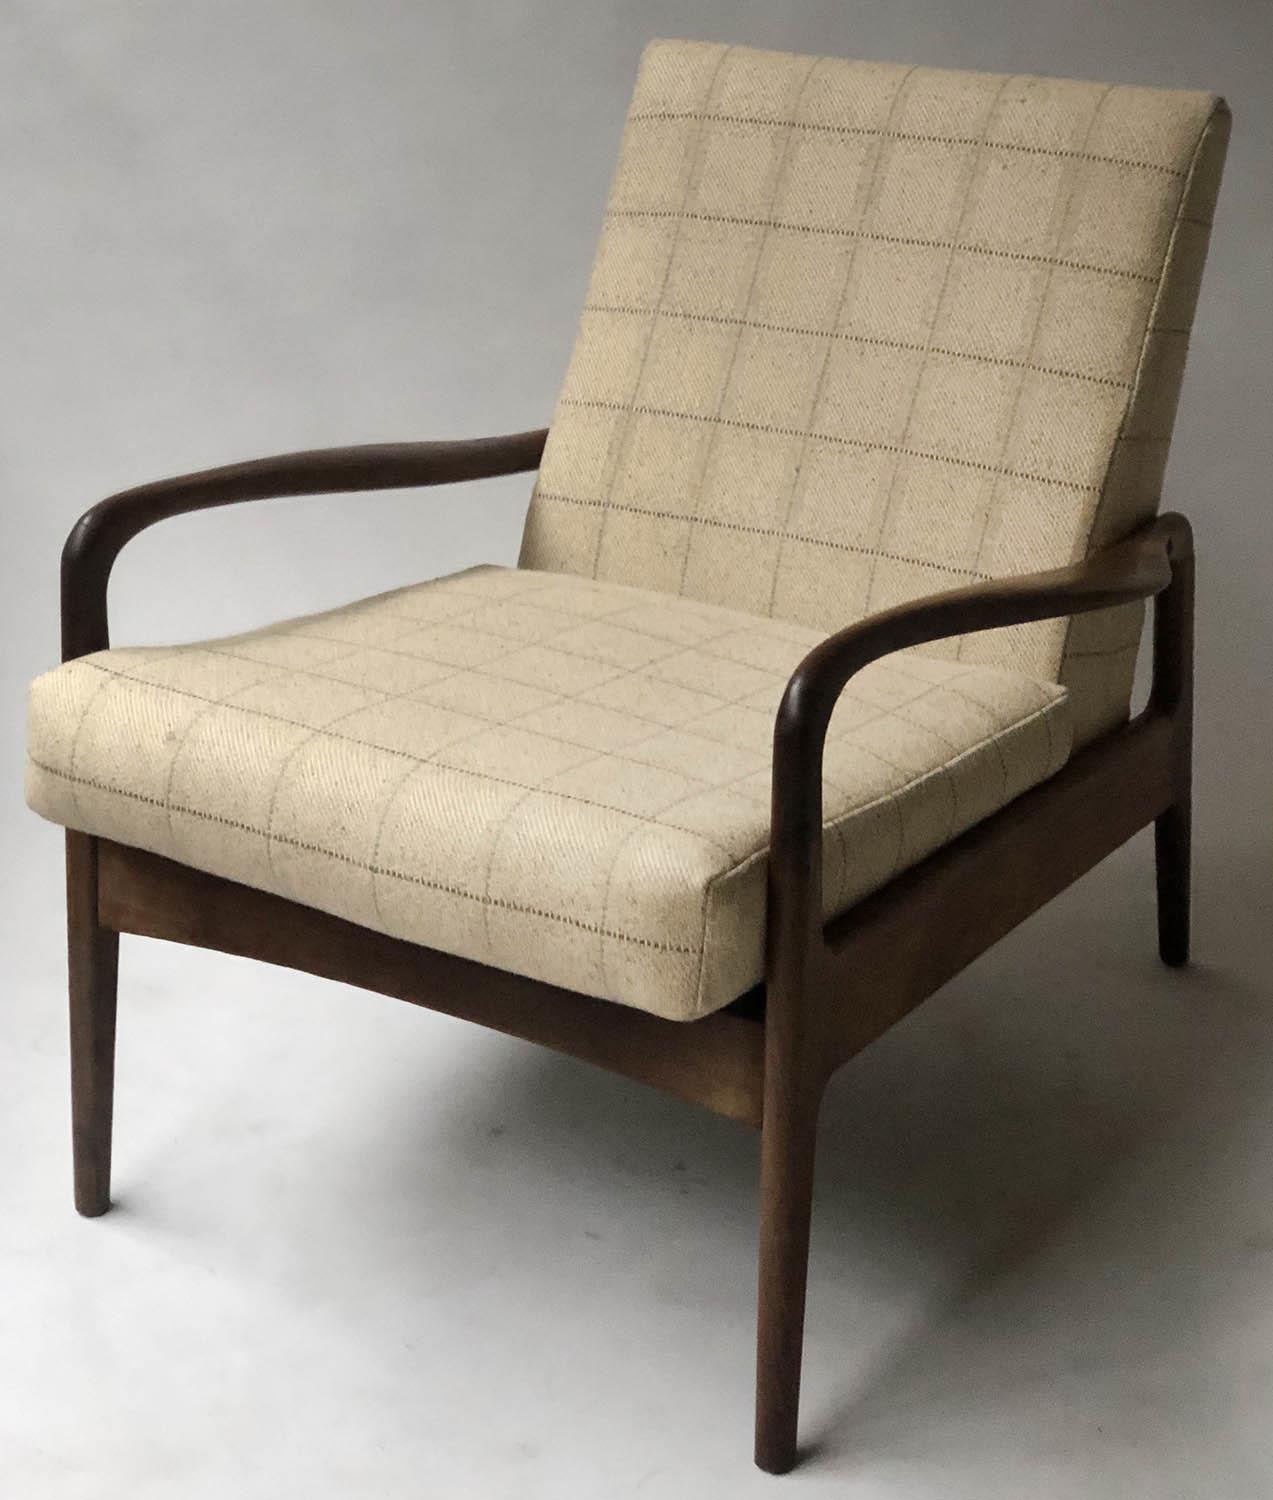 DANISH ARMCHAIR, 3rd quarter 20th century Danish teak open armchair with oatmeal check upholstery.